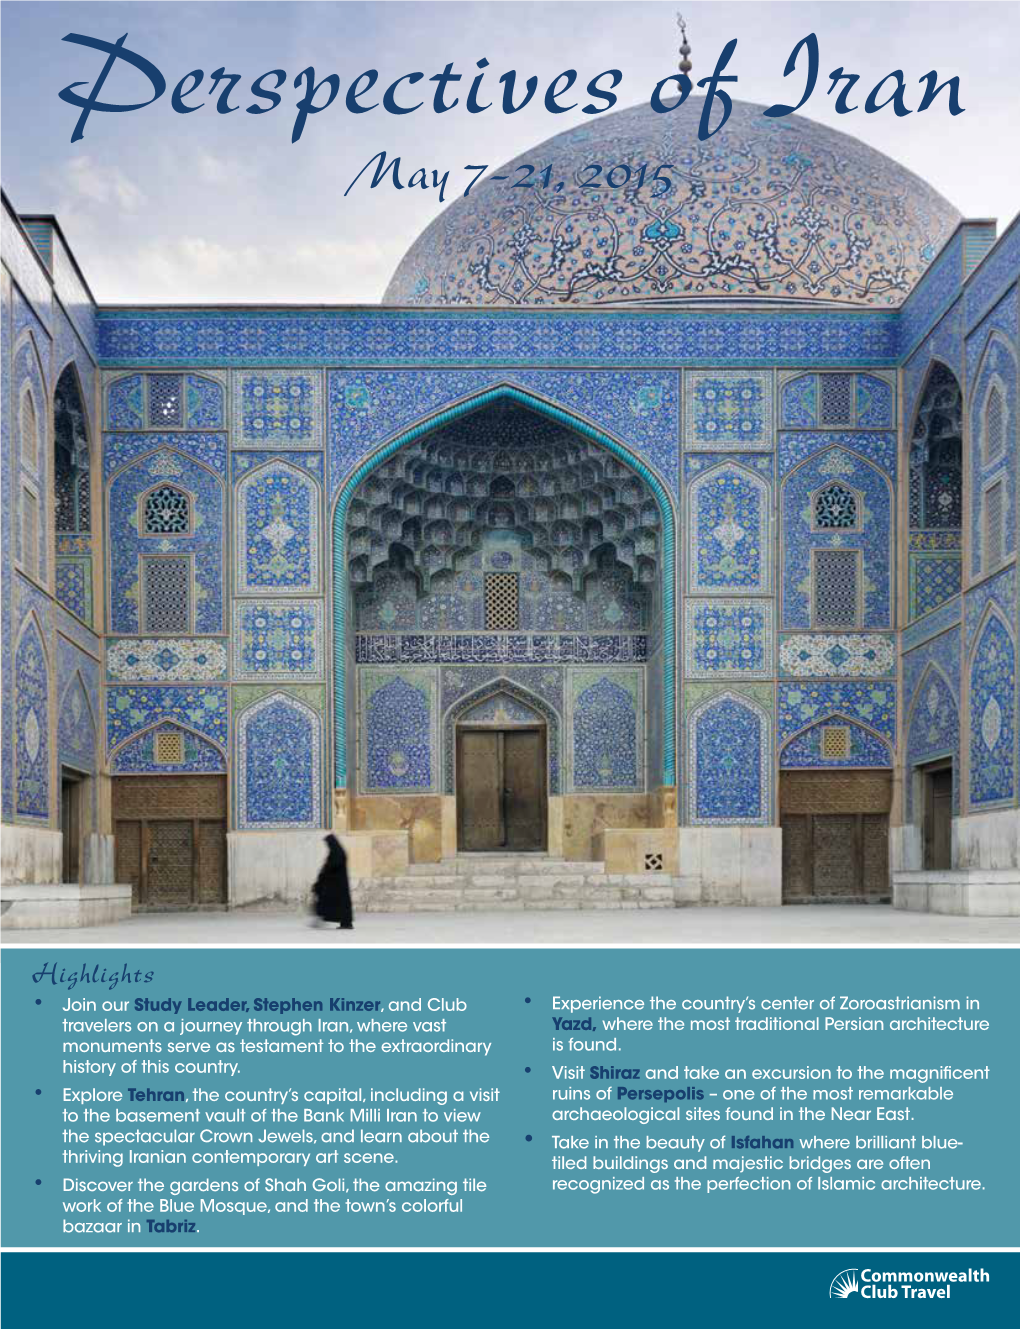 Isfahan Where Brilliant Blue- Thriving Iranian Contemporary Art Scene